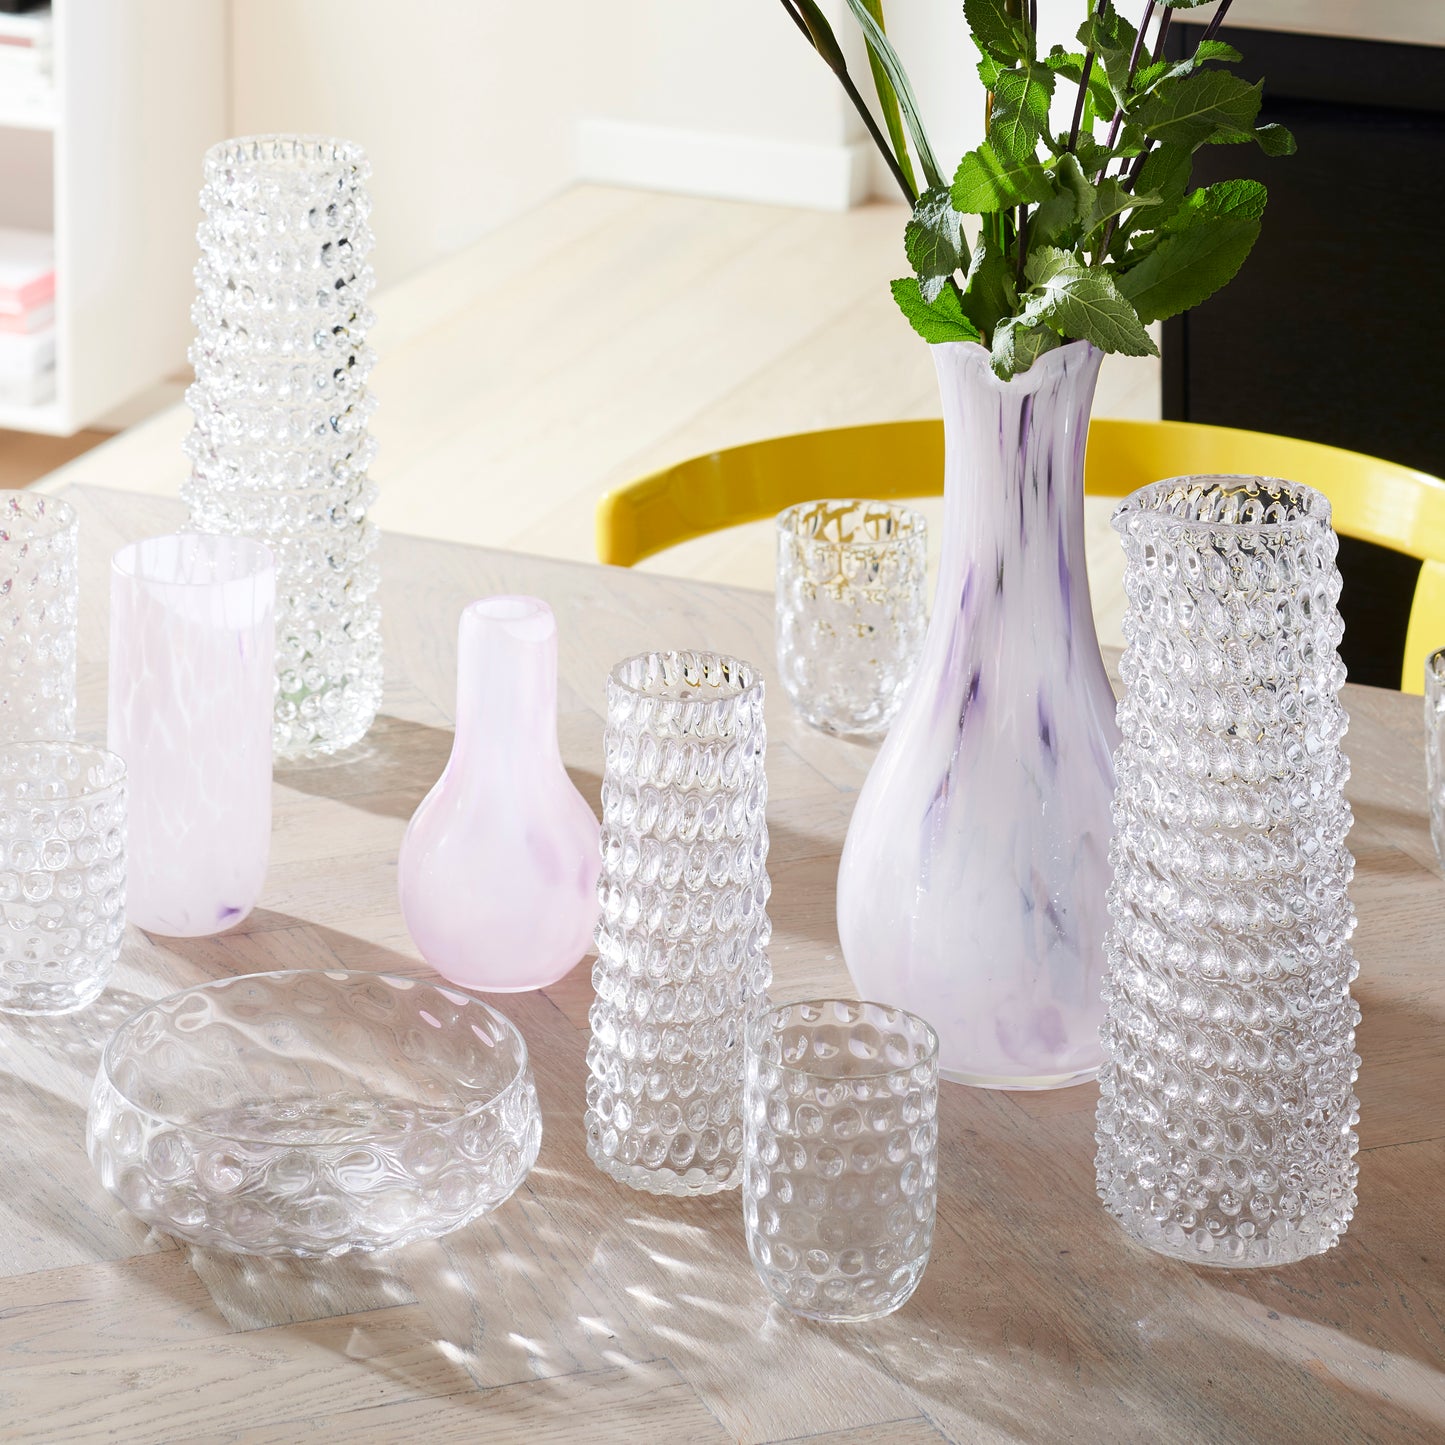 Kodanska Danish Summer Water Carafe Carafe / Vase Clear